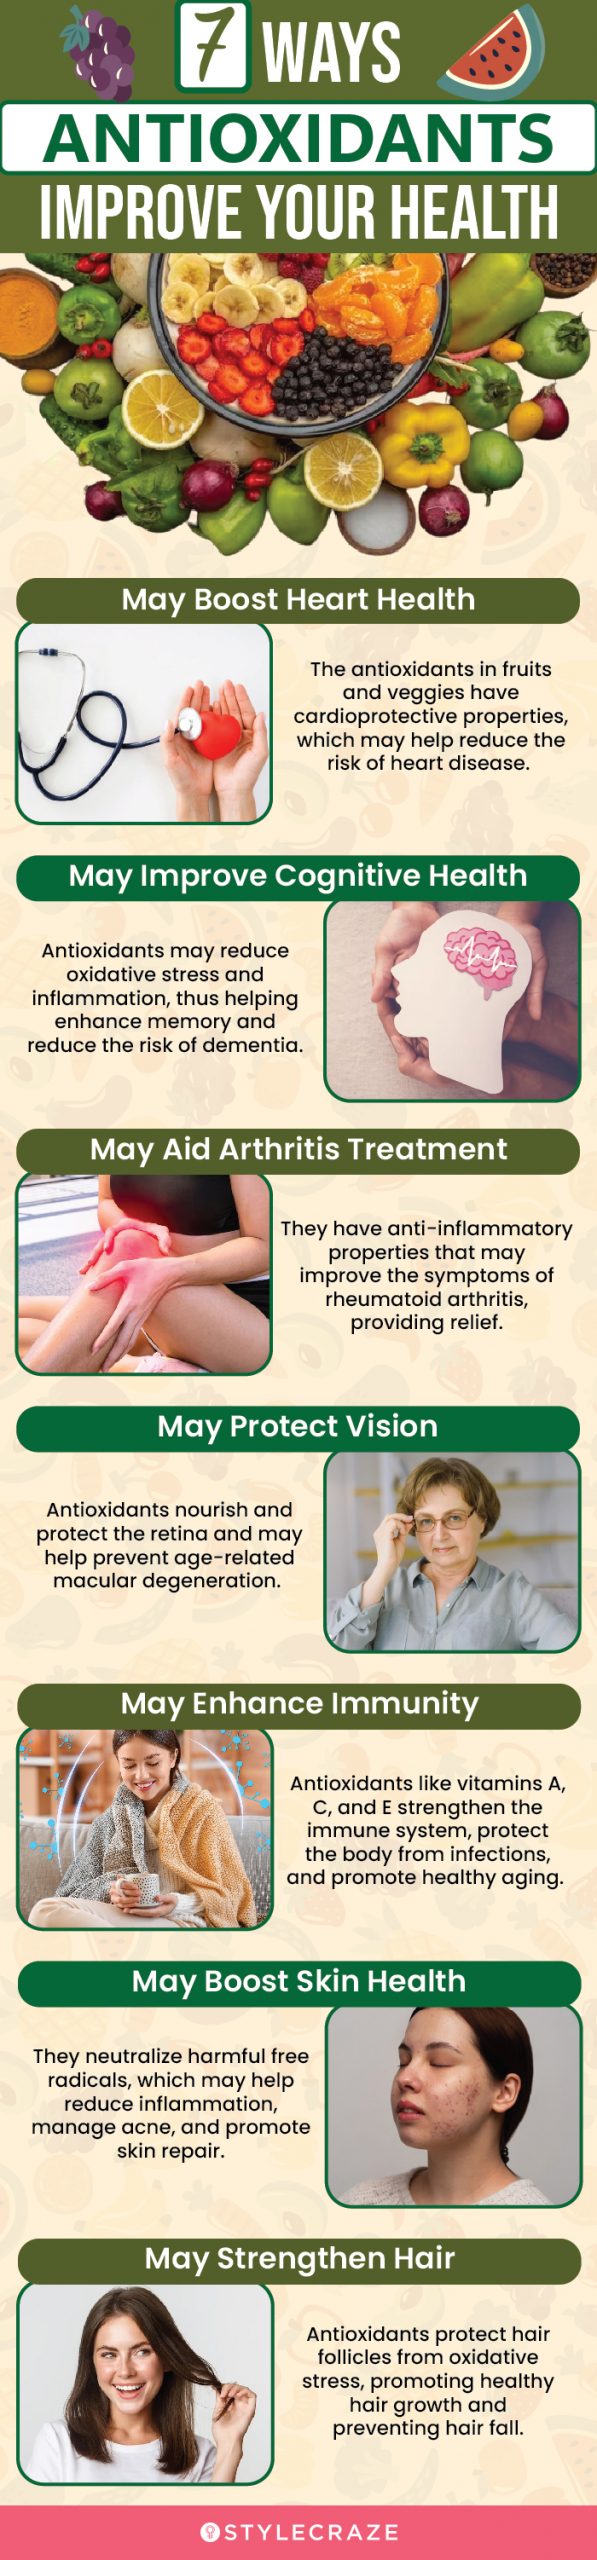 7 ways antioxidants improve your health (infographic)